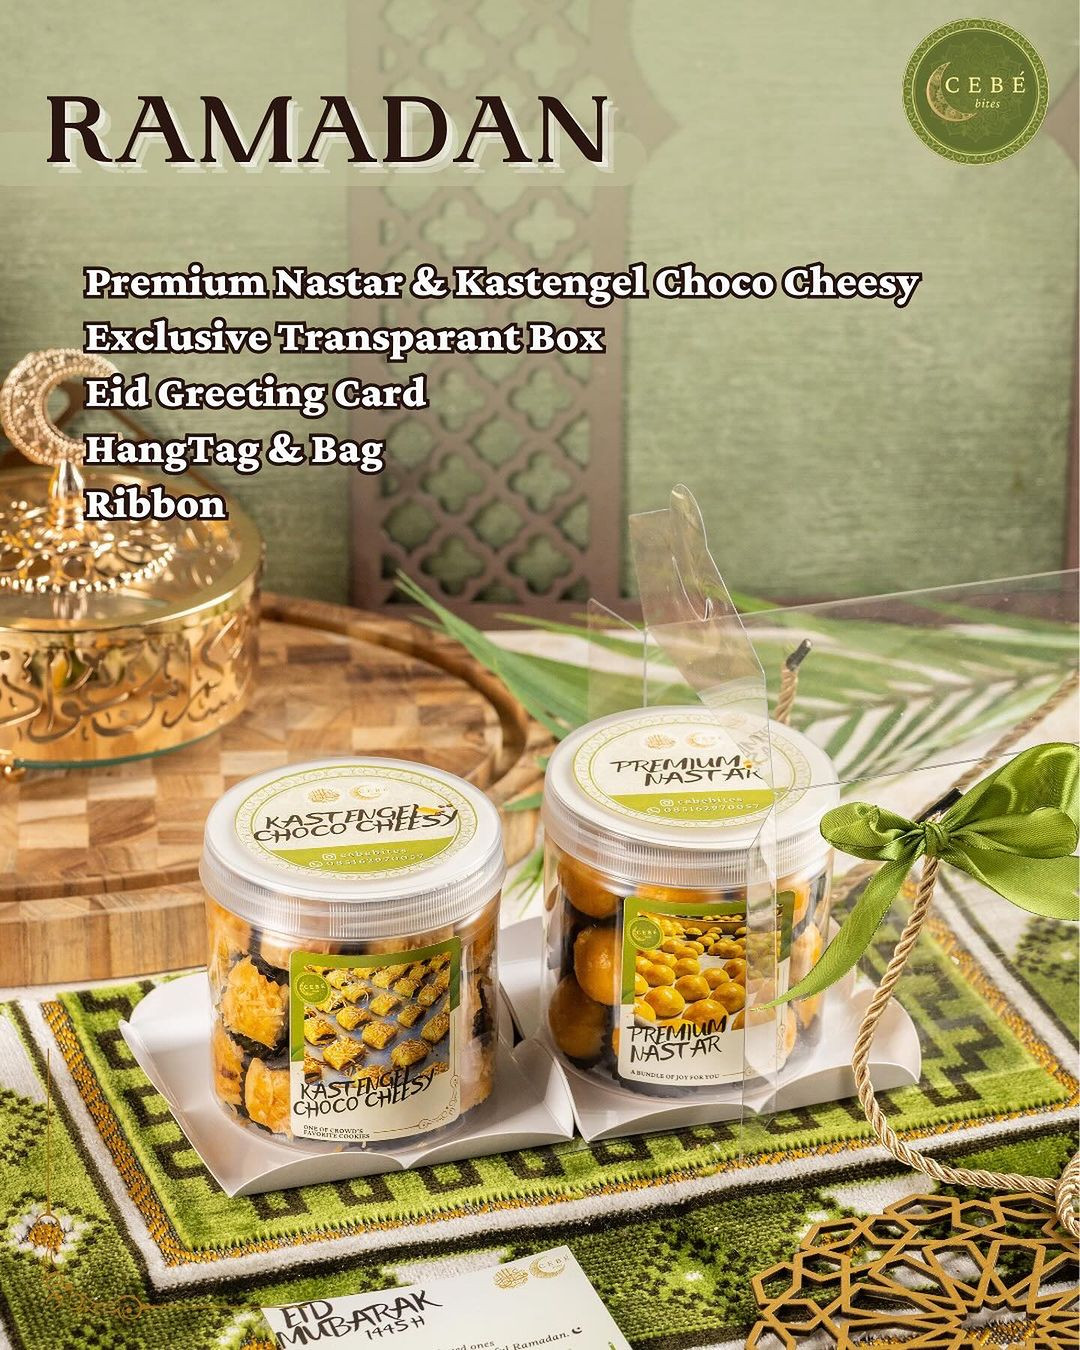 Ramadan-Premium Nastar dan Kastengel Choco Cheesy